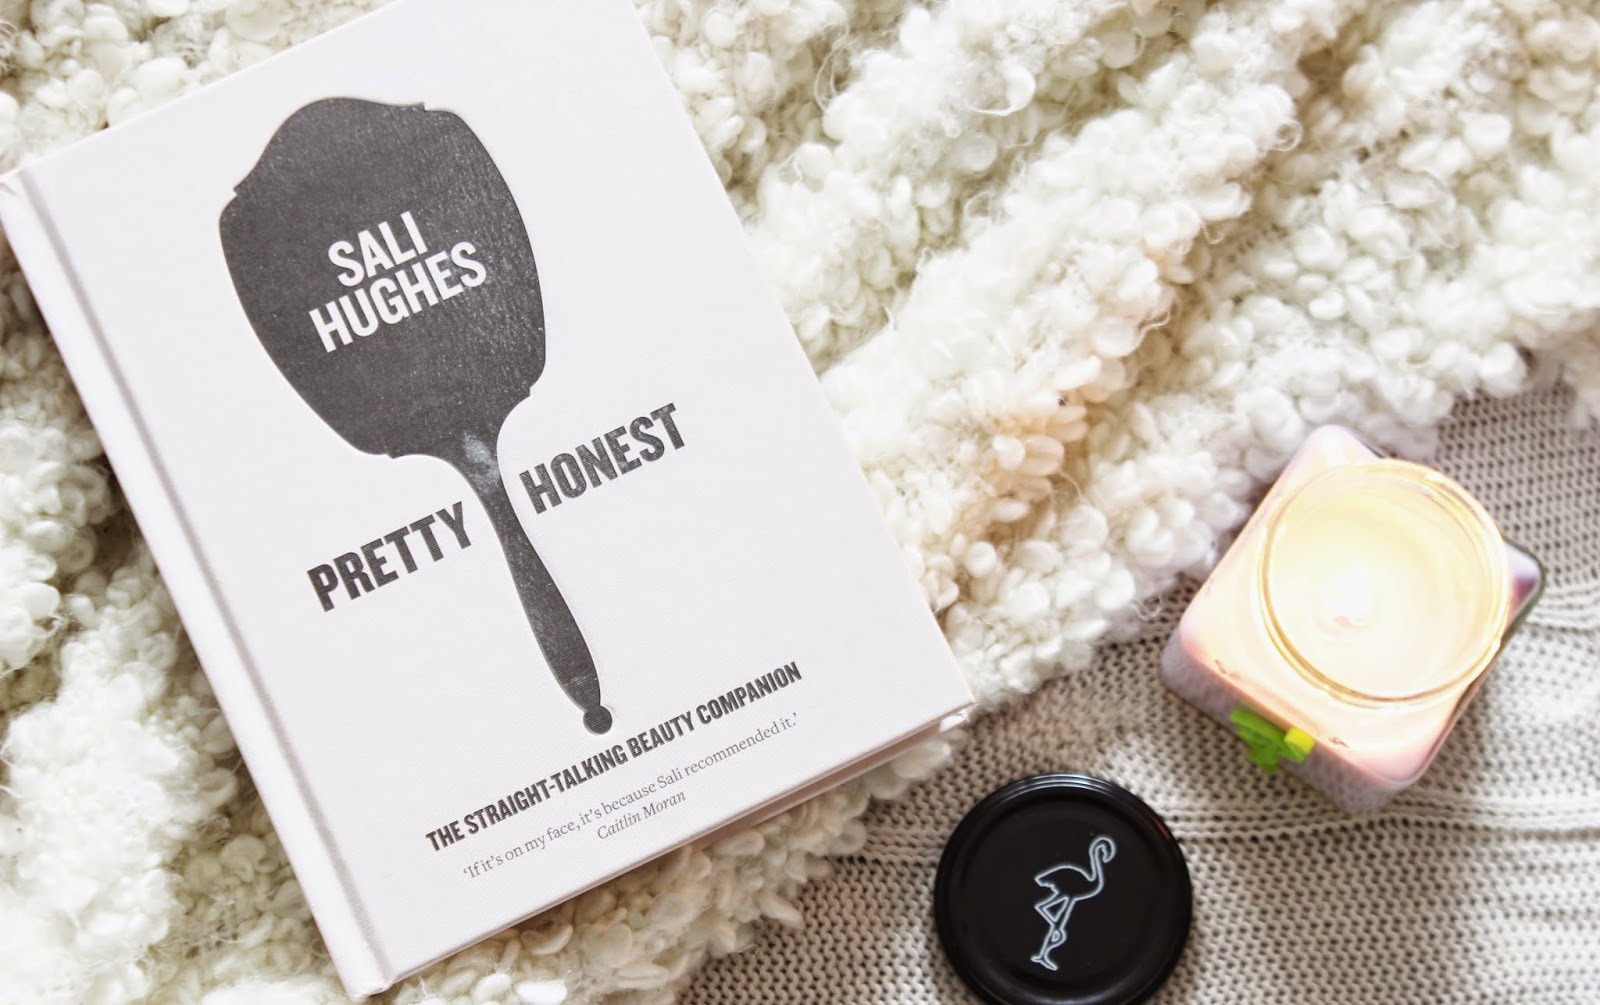 Pretty Honest: The Straight-Talking Beauty Companion By Sali Hughes